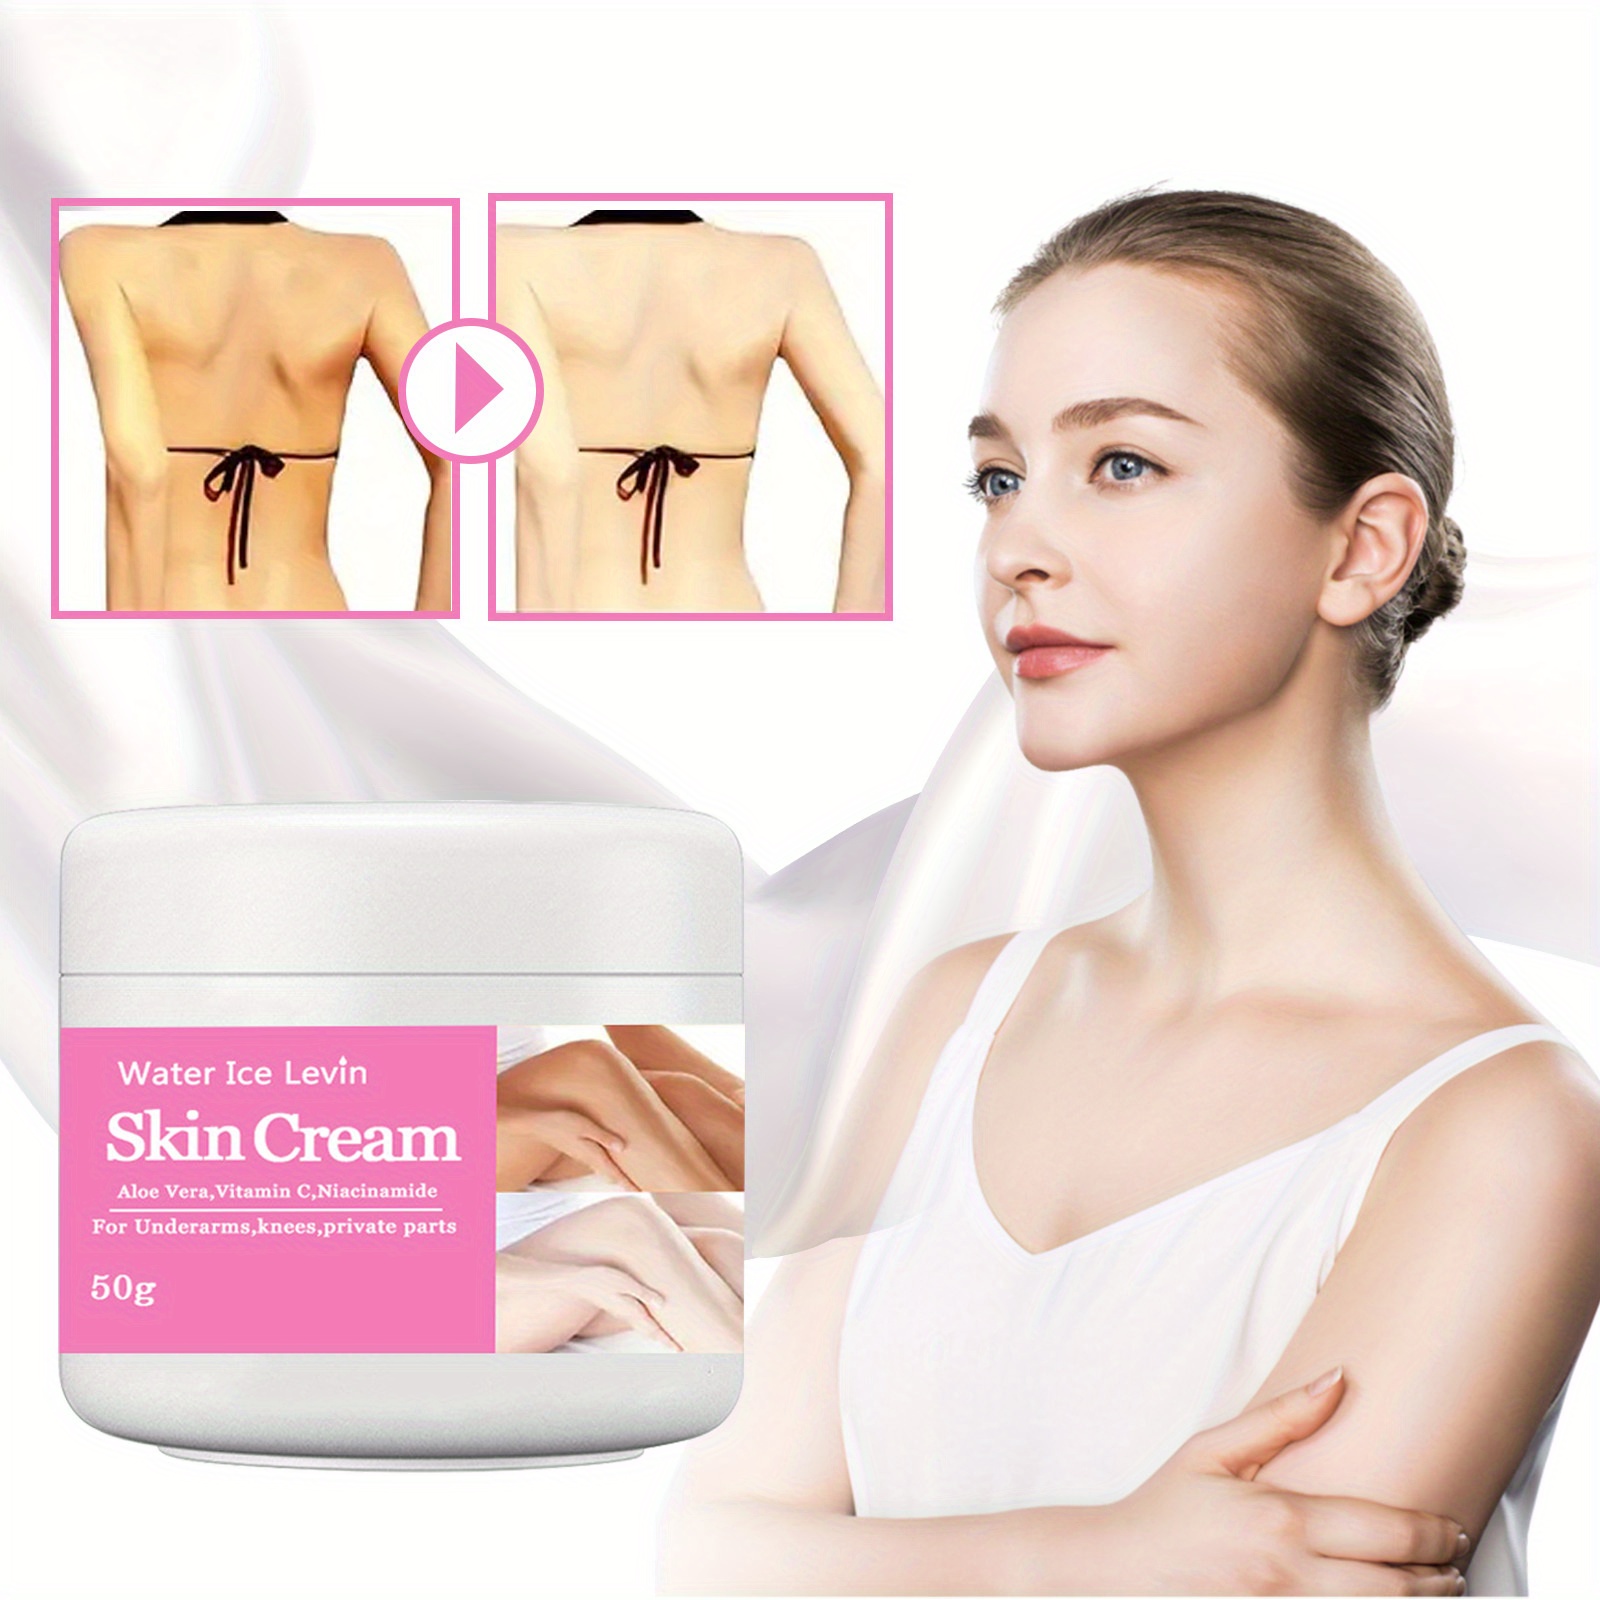 Female Intimate Tightening Cream Enhances Sensuality Repairs - Temu